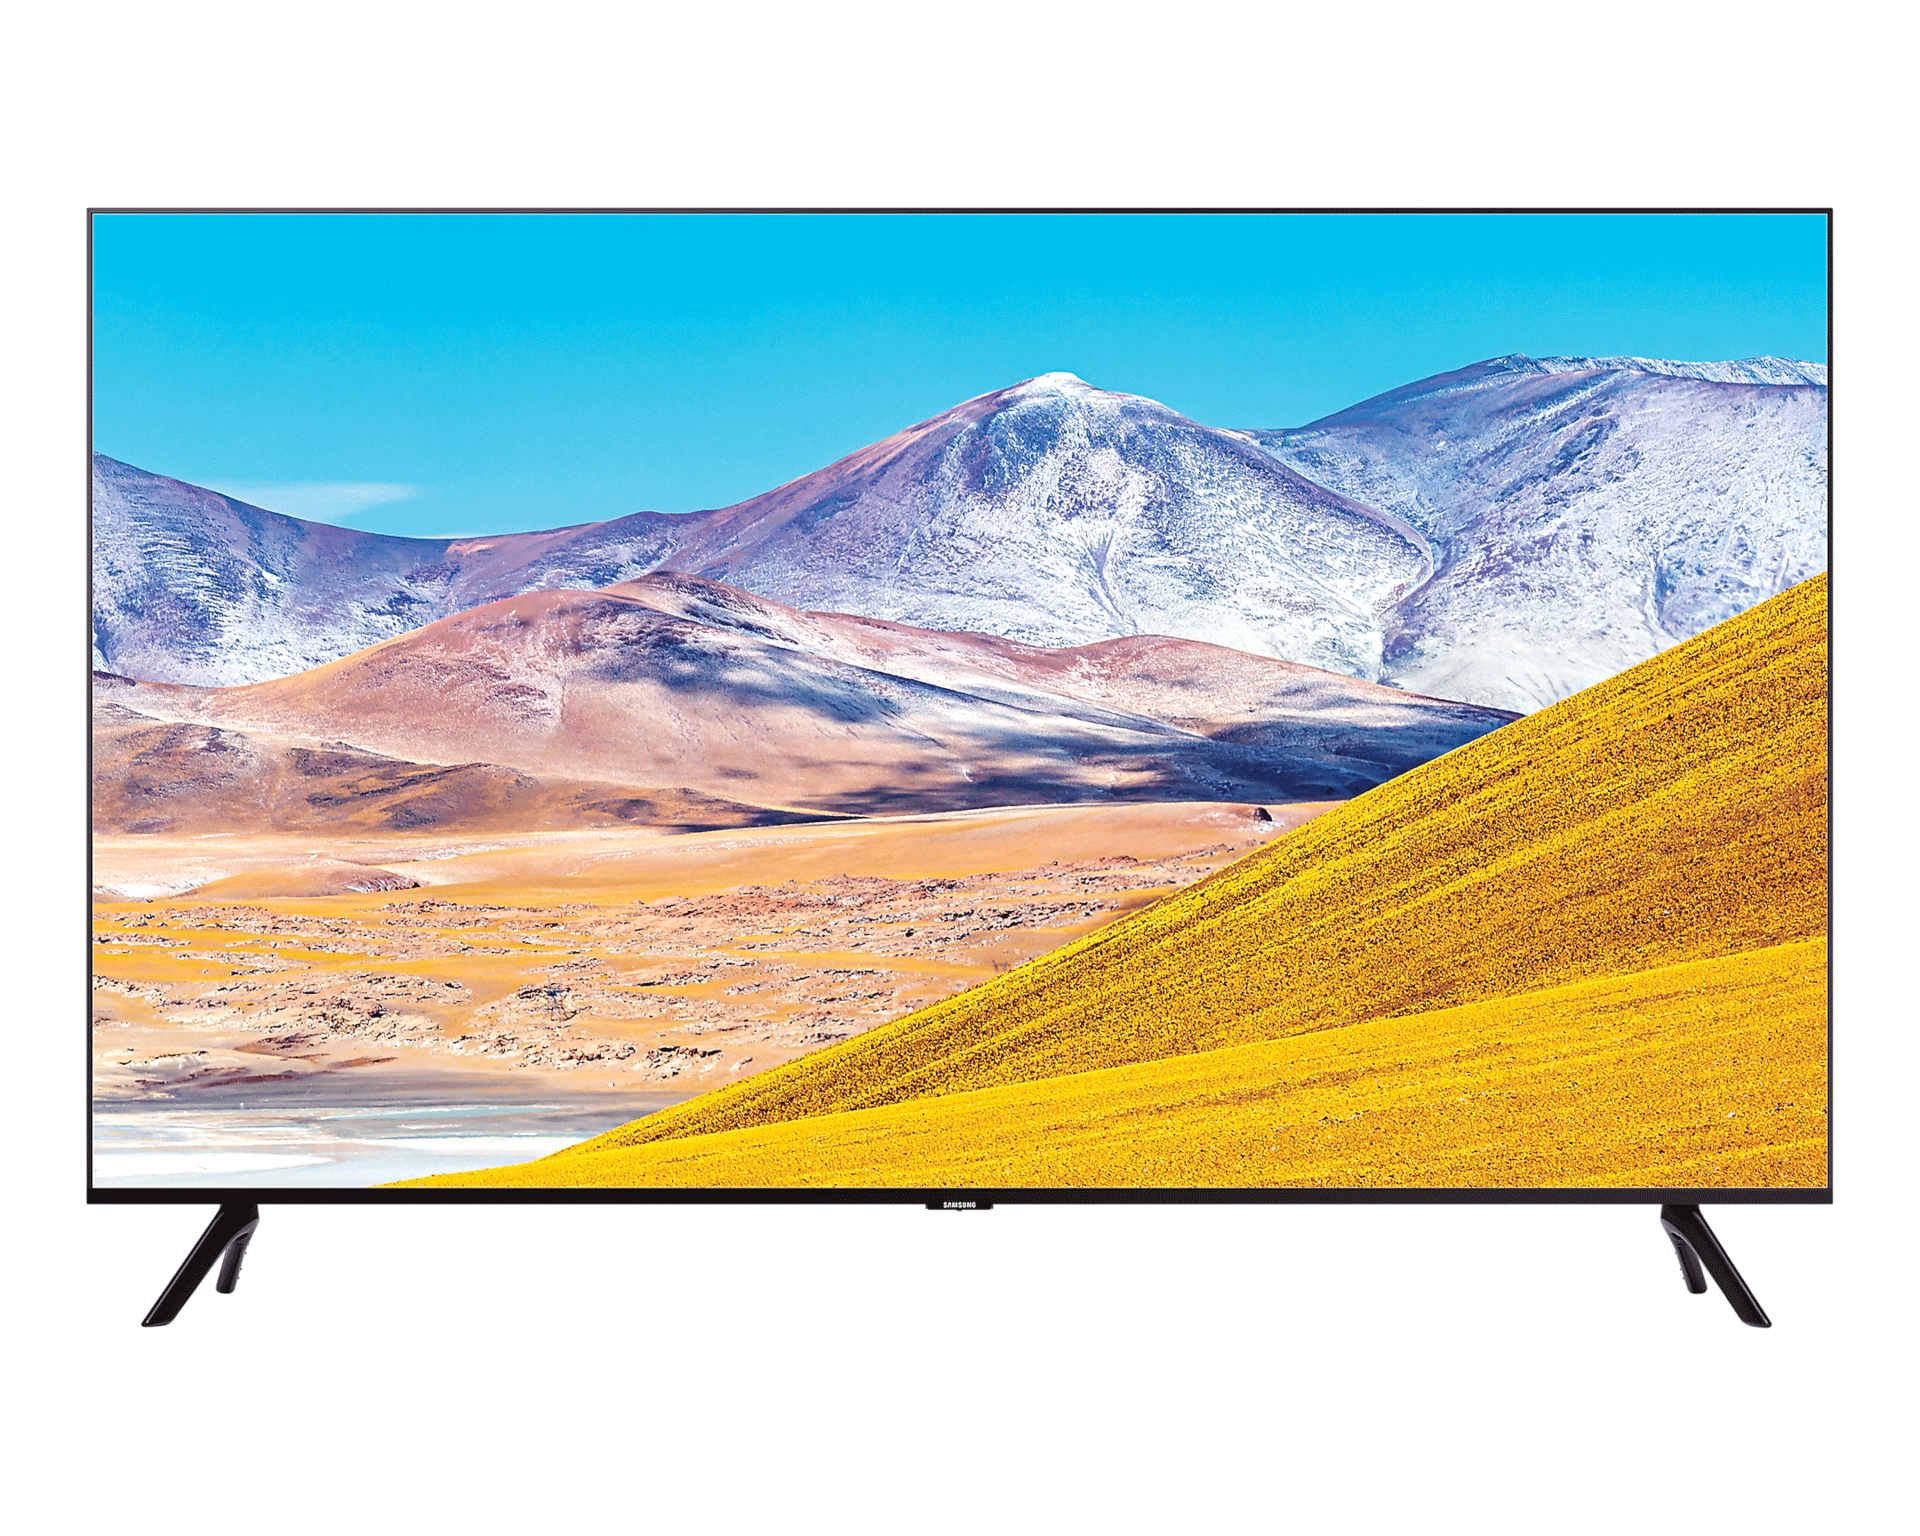  Samsung Televisor LED inteligente 4K Ultra HD de 50 pulgadas -  UN50TU7000/UN50TU700D (modelo 2020) (renovado)